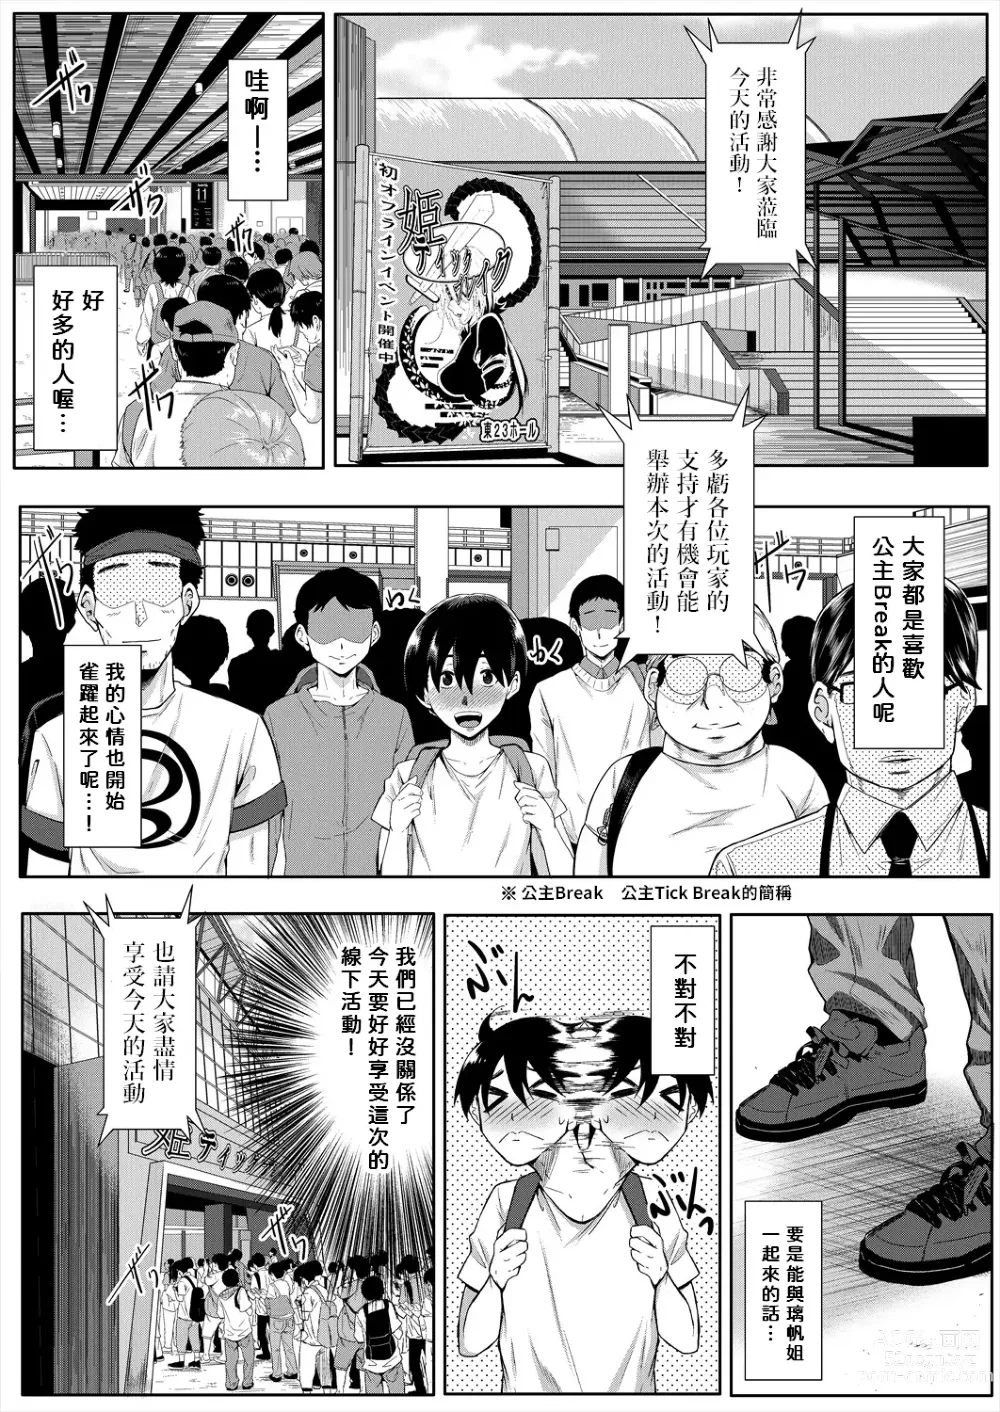 Page 4 of manga Strawberry Mermaid 2nd Dive